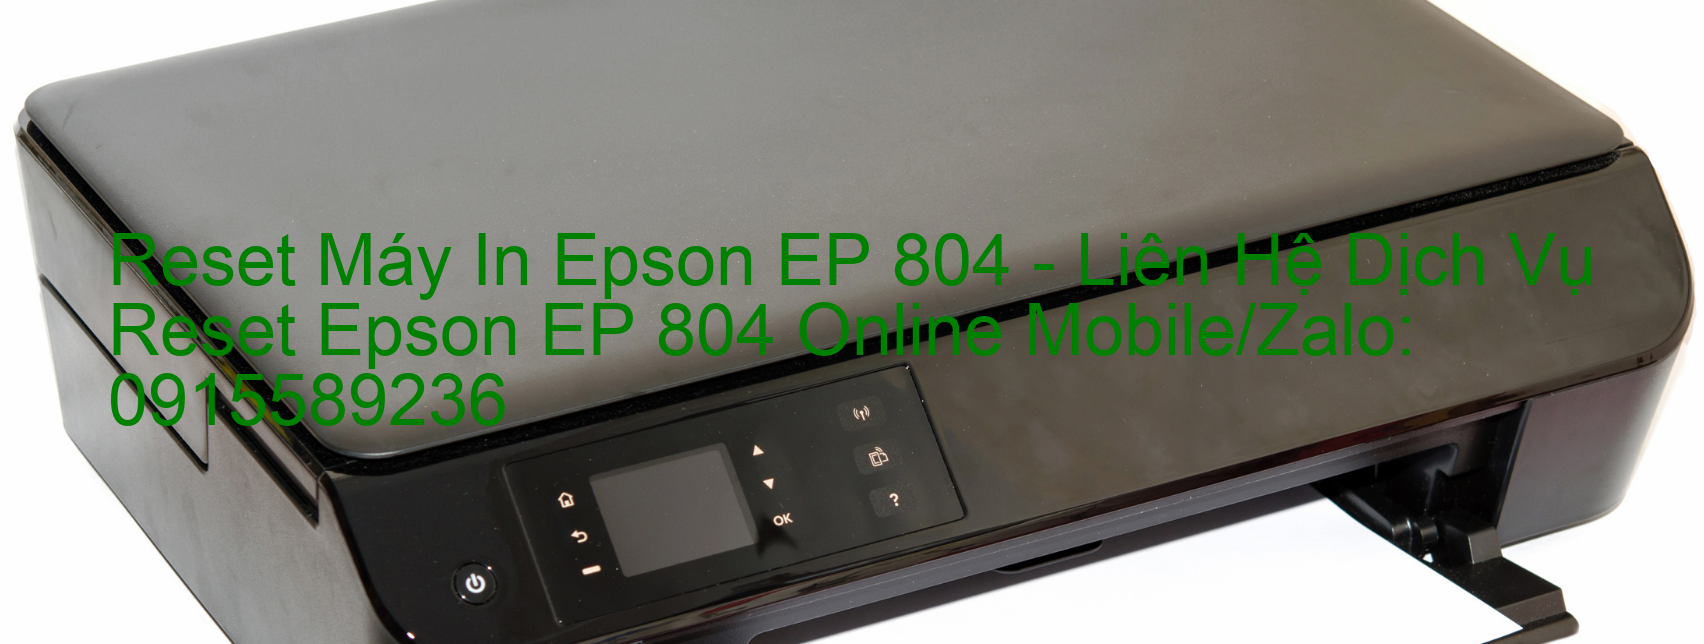 Reset Máy In Epson EP 804 Online